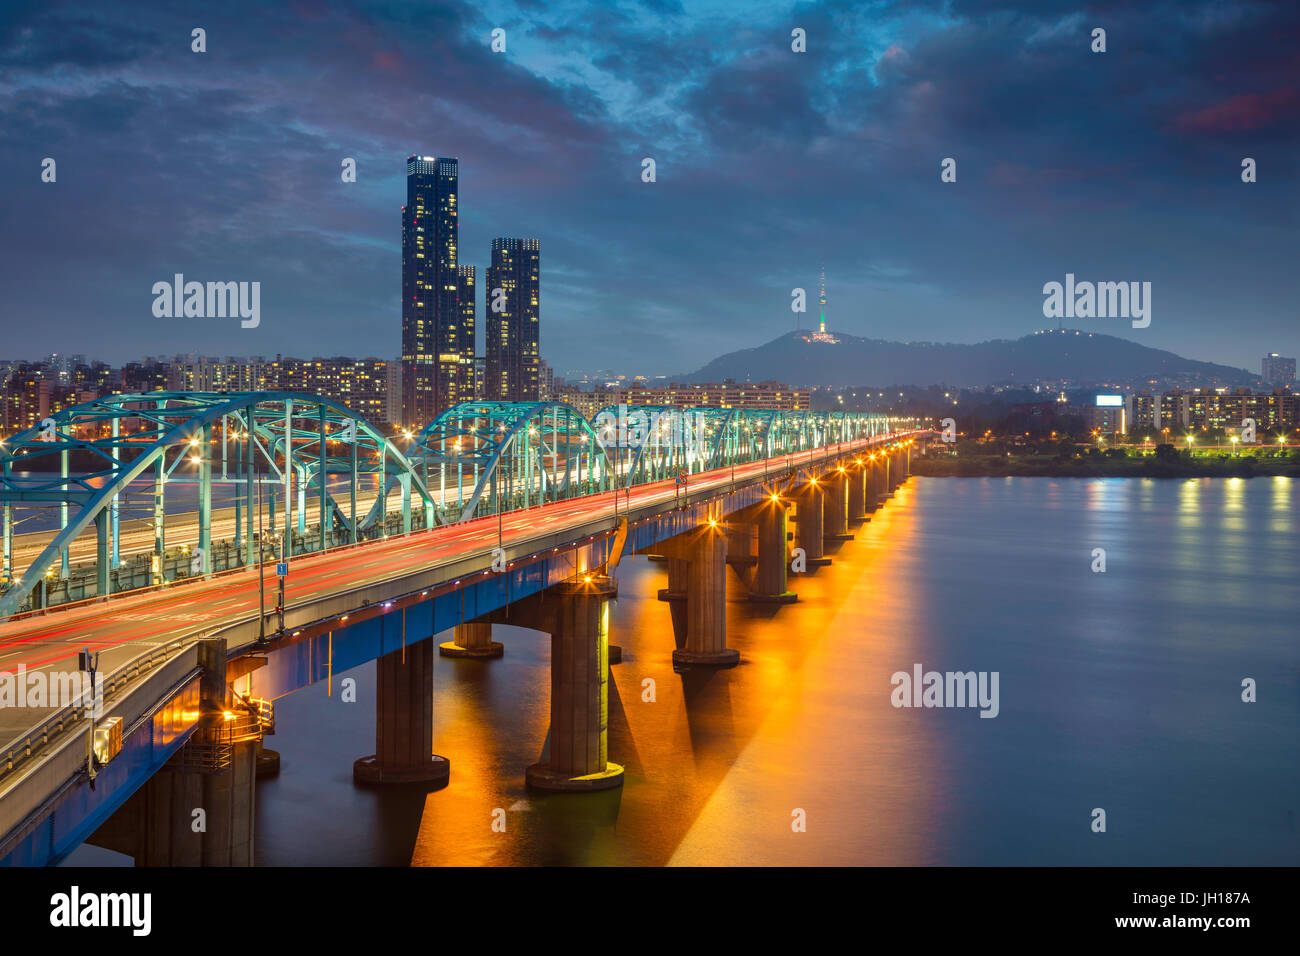 Seoul. Image of Seoul, South Korea with Dongjak Bridge and Hangang river at twilight. Stock Photo